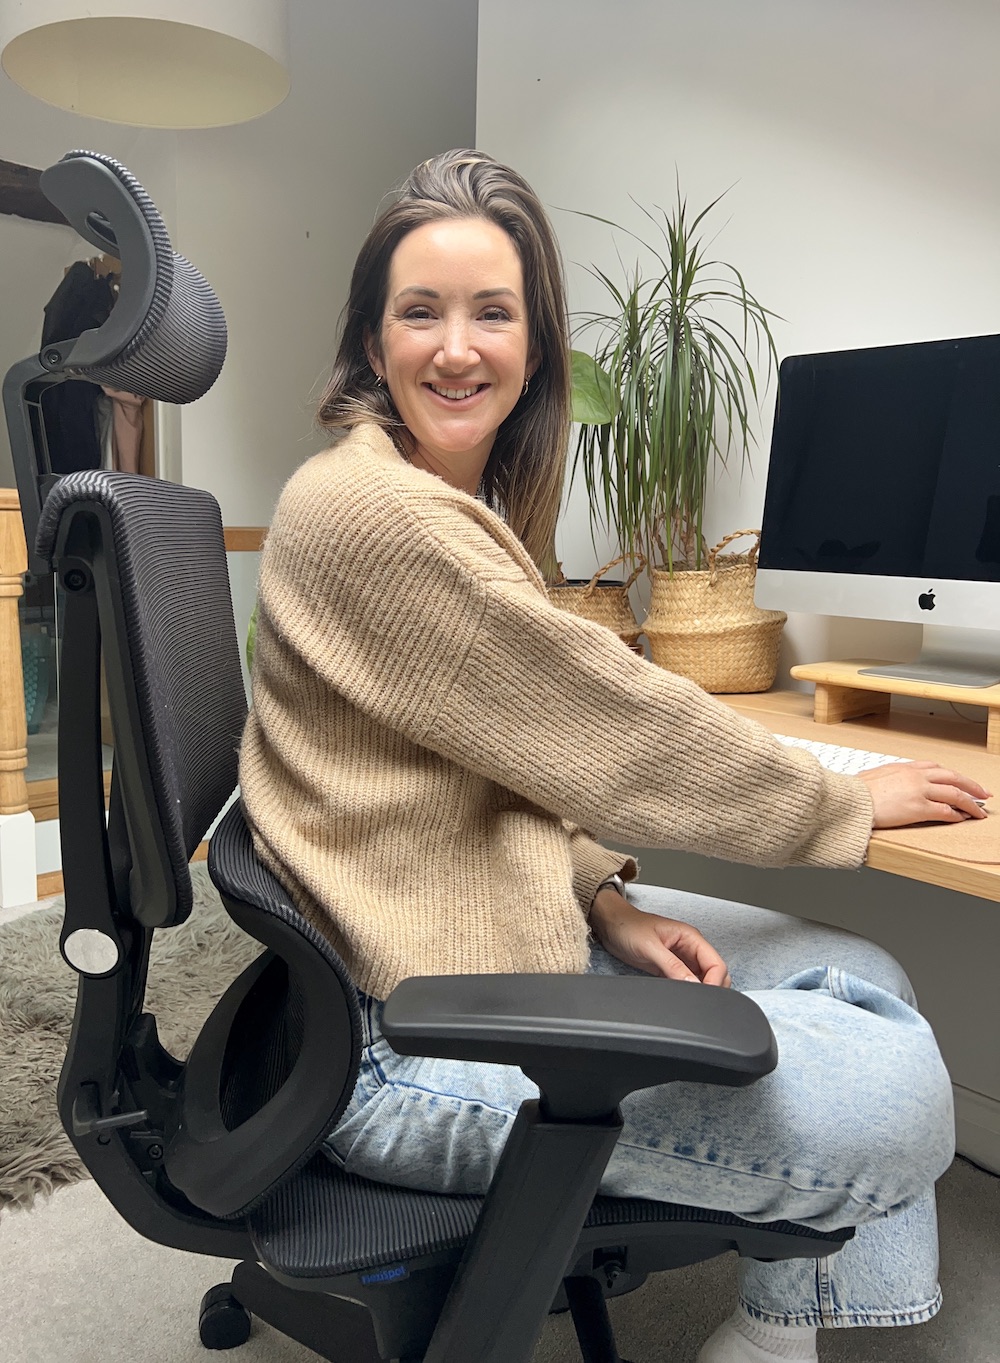 Improved posture using an Ergonomic desk chair